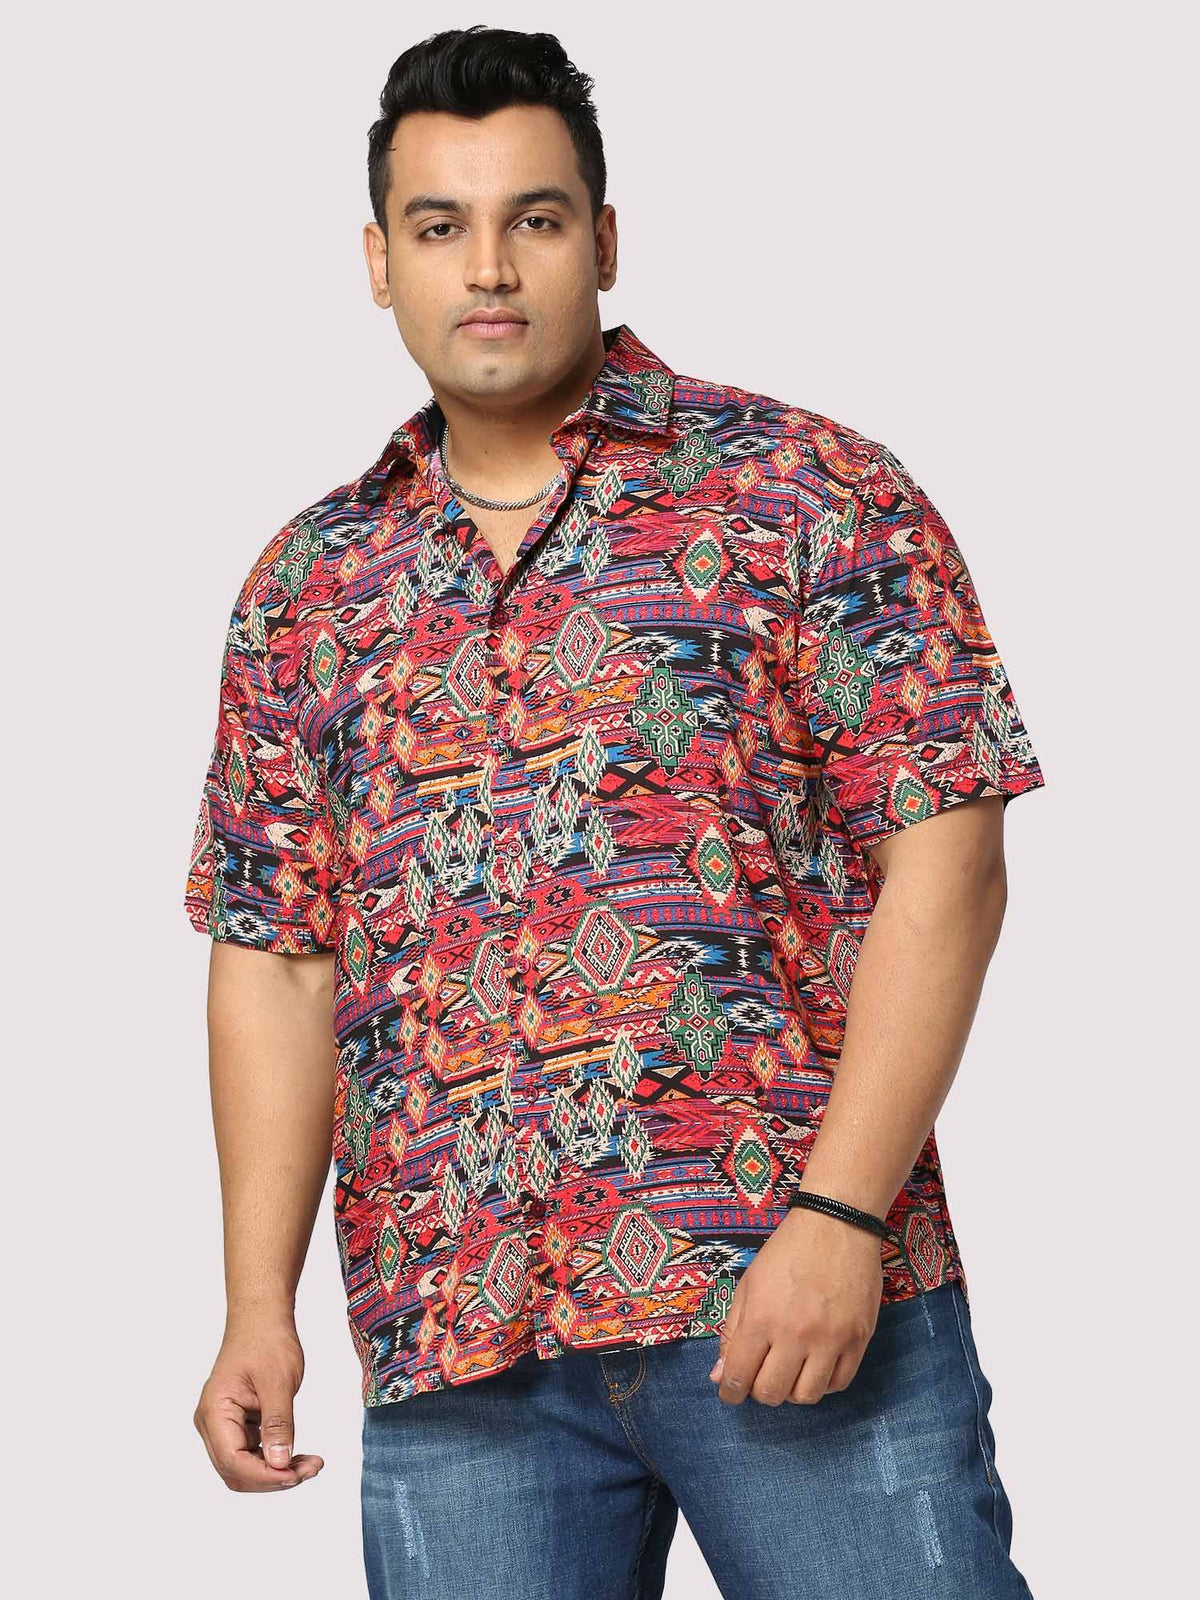 Electro Half Sleeve Digital Print Shirt - Guniaa Fashions